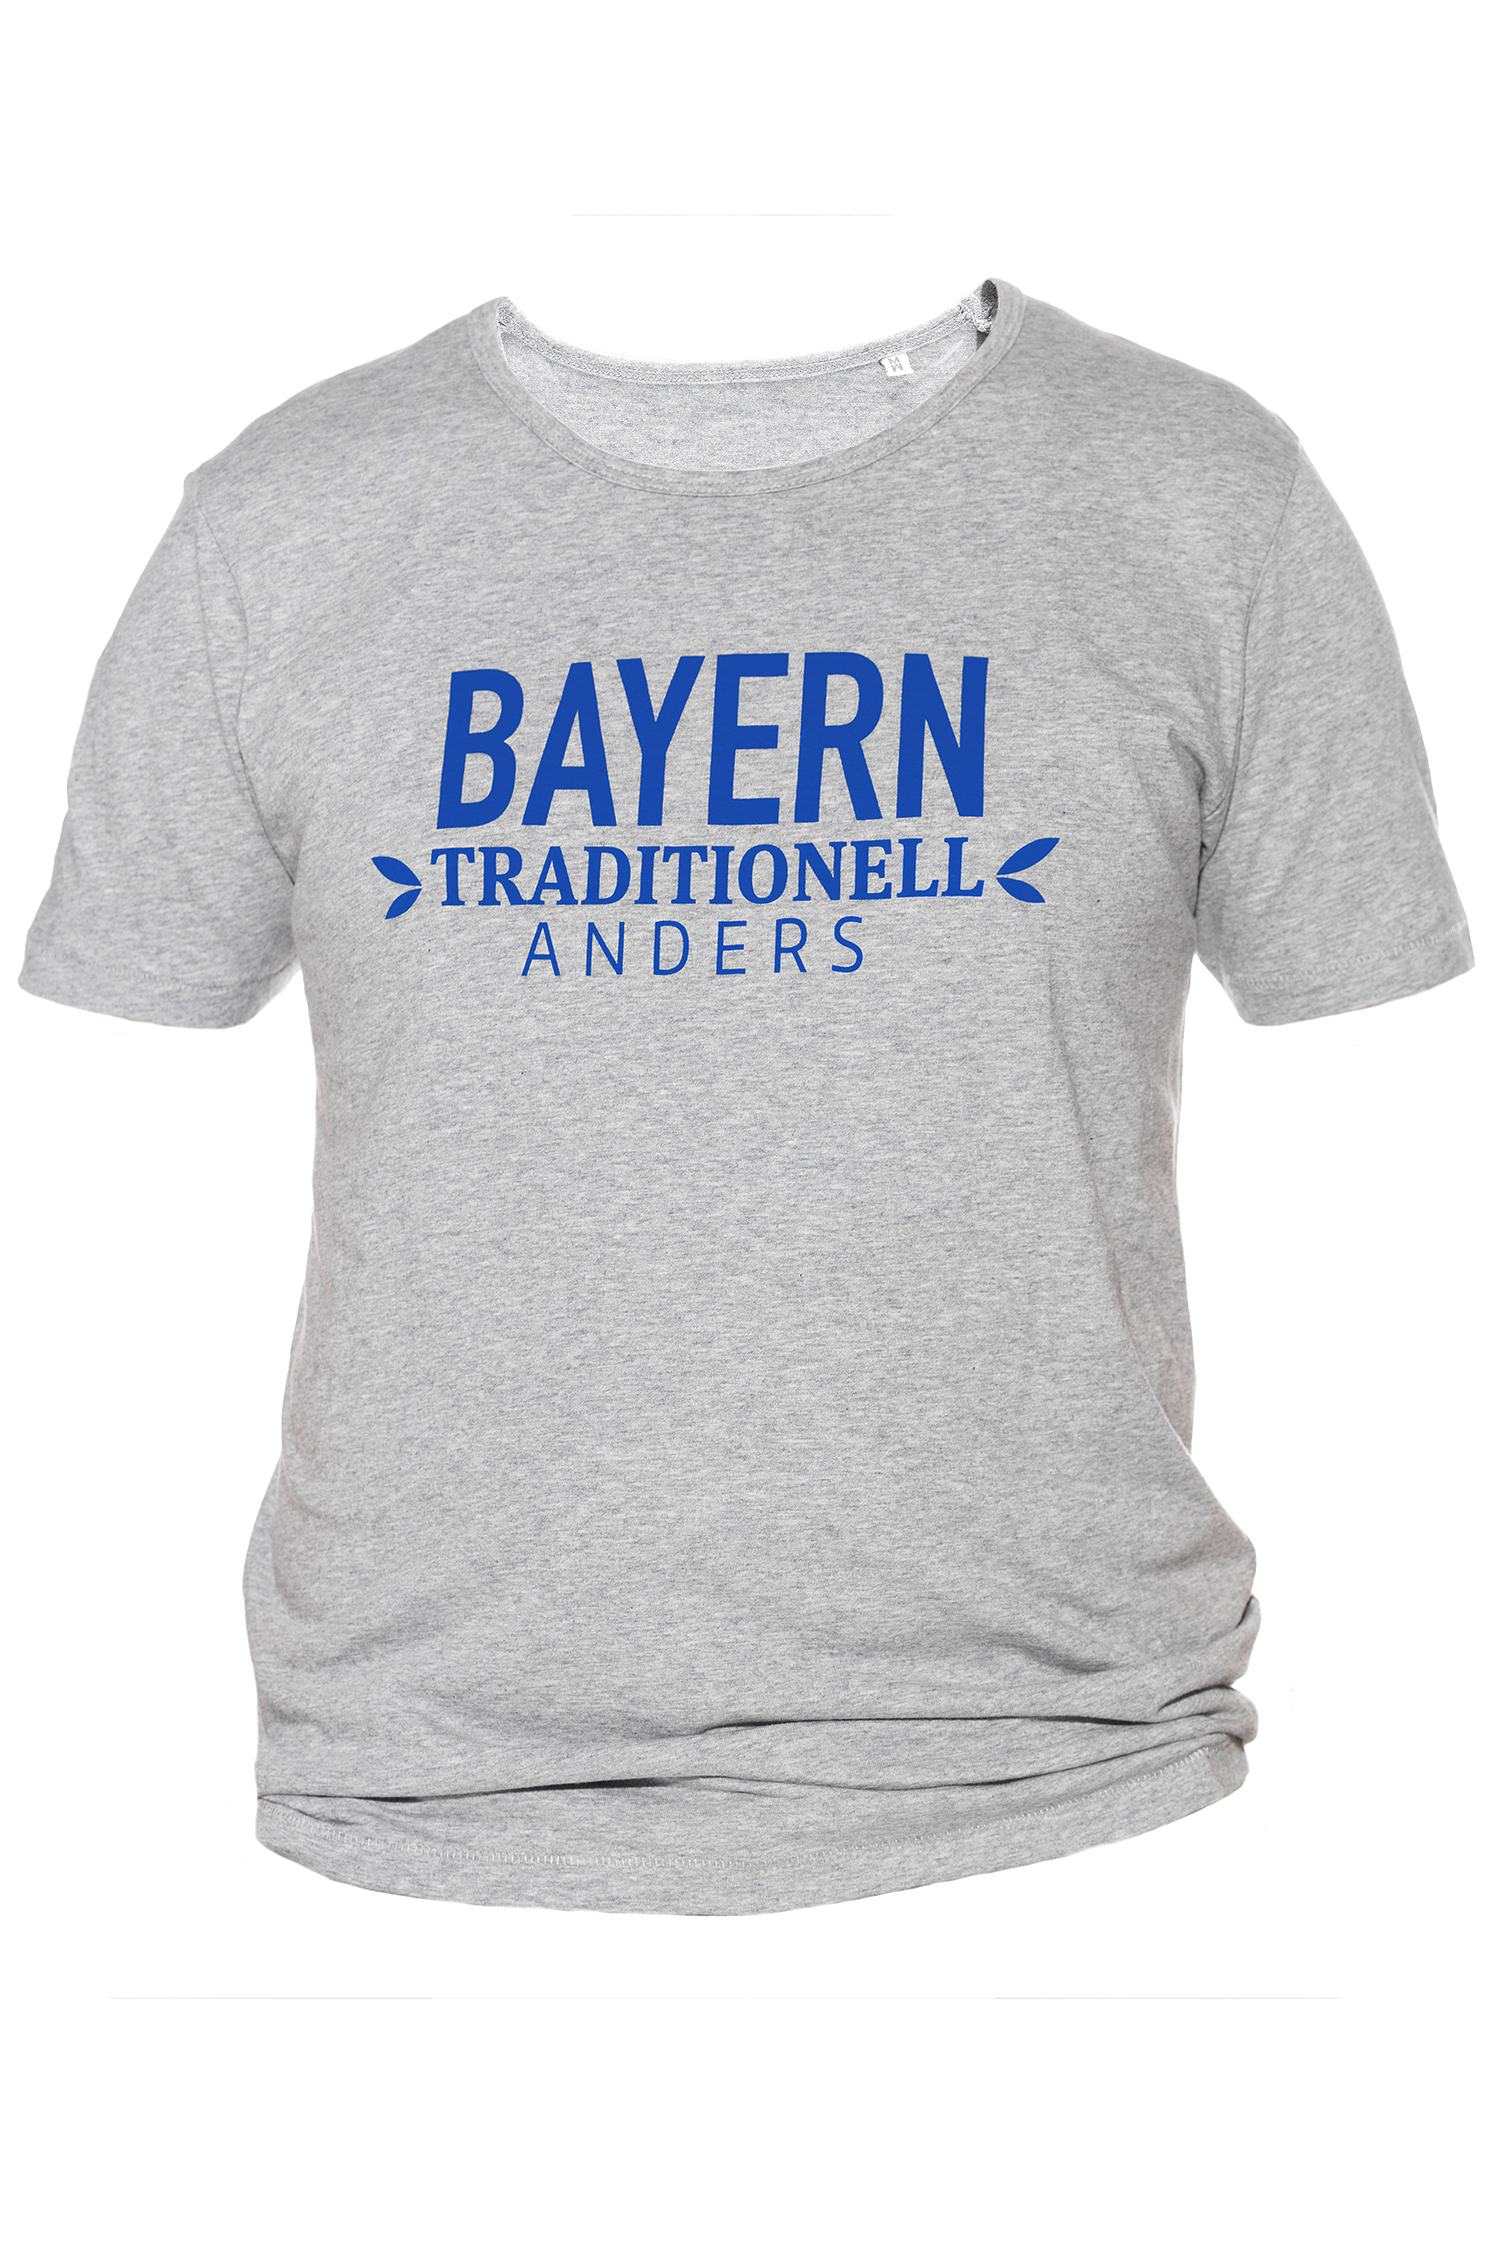 T-Shirt Bayern traditionell anders M | grau / blau